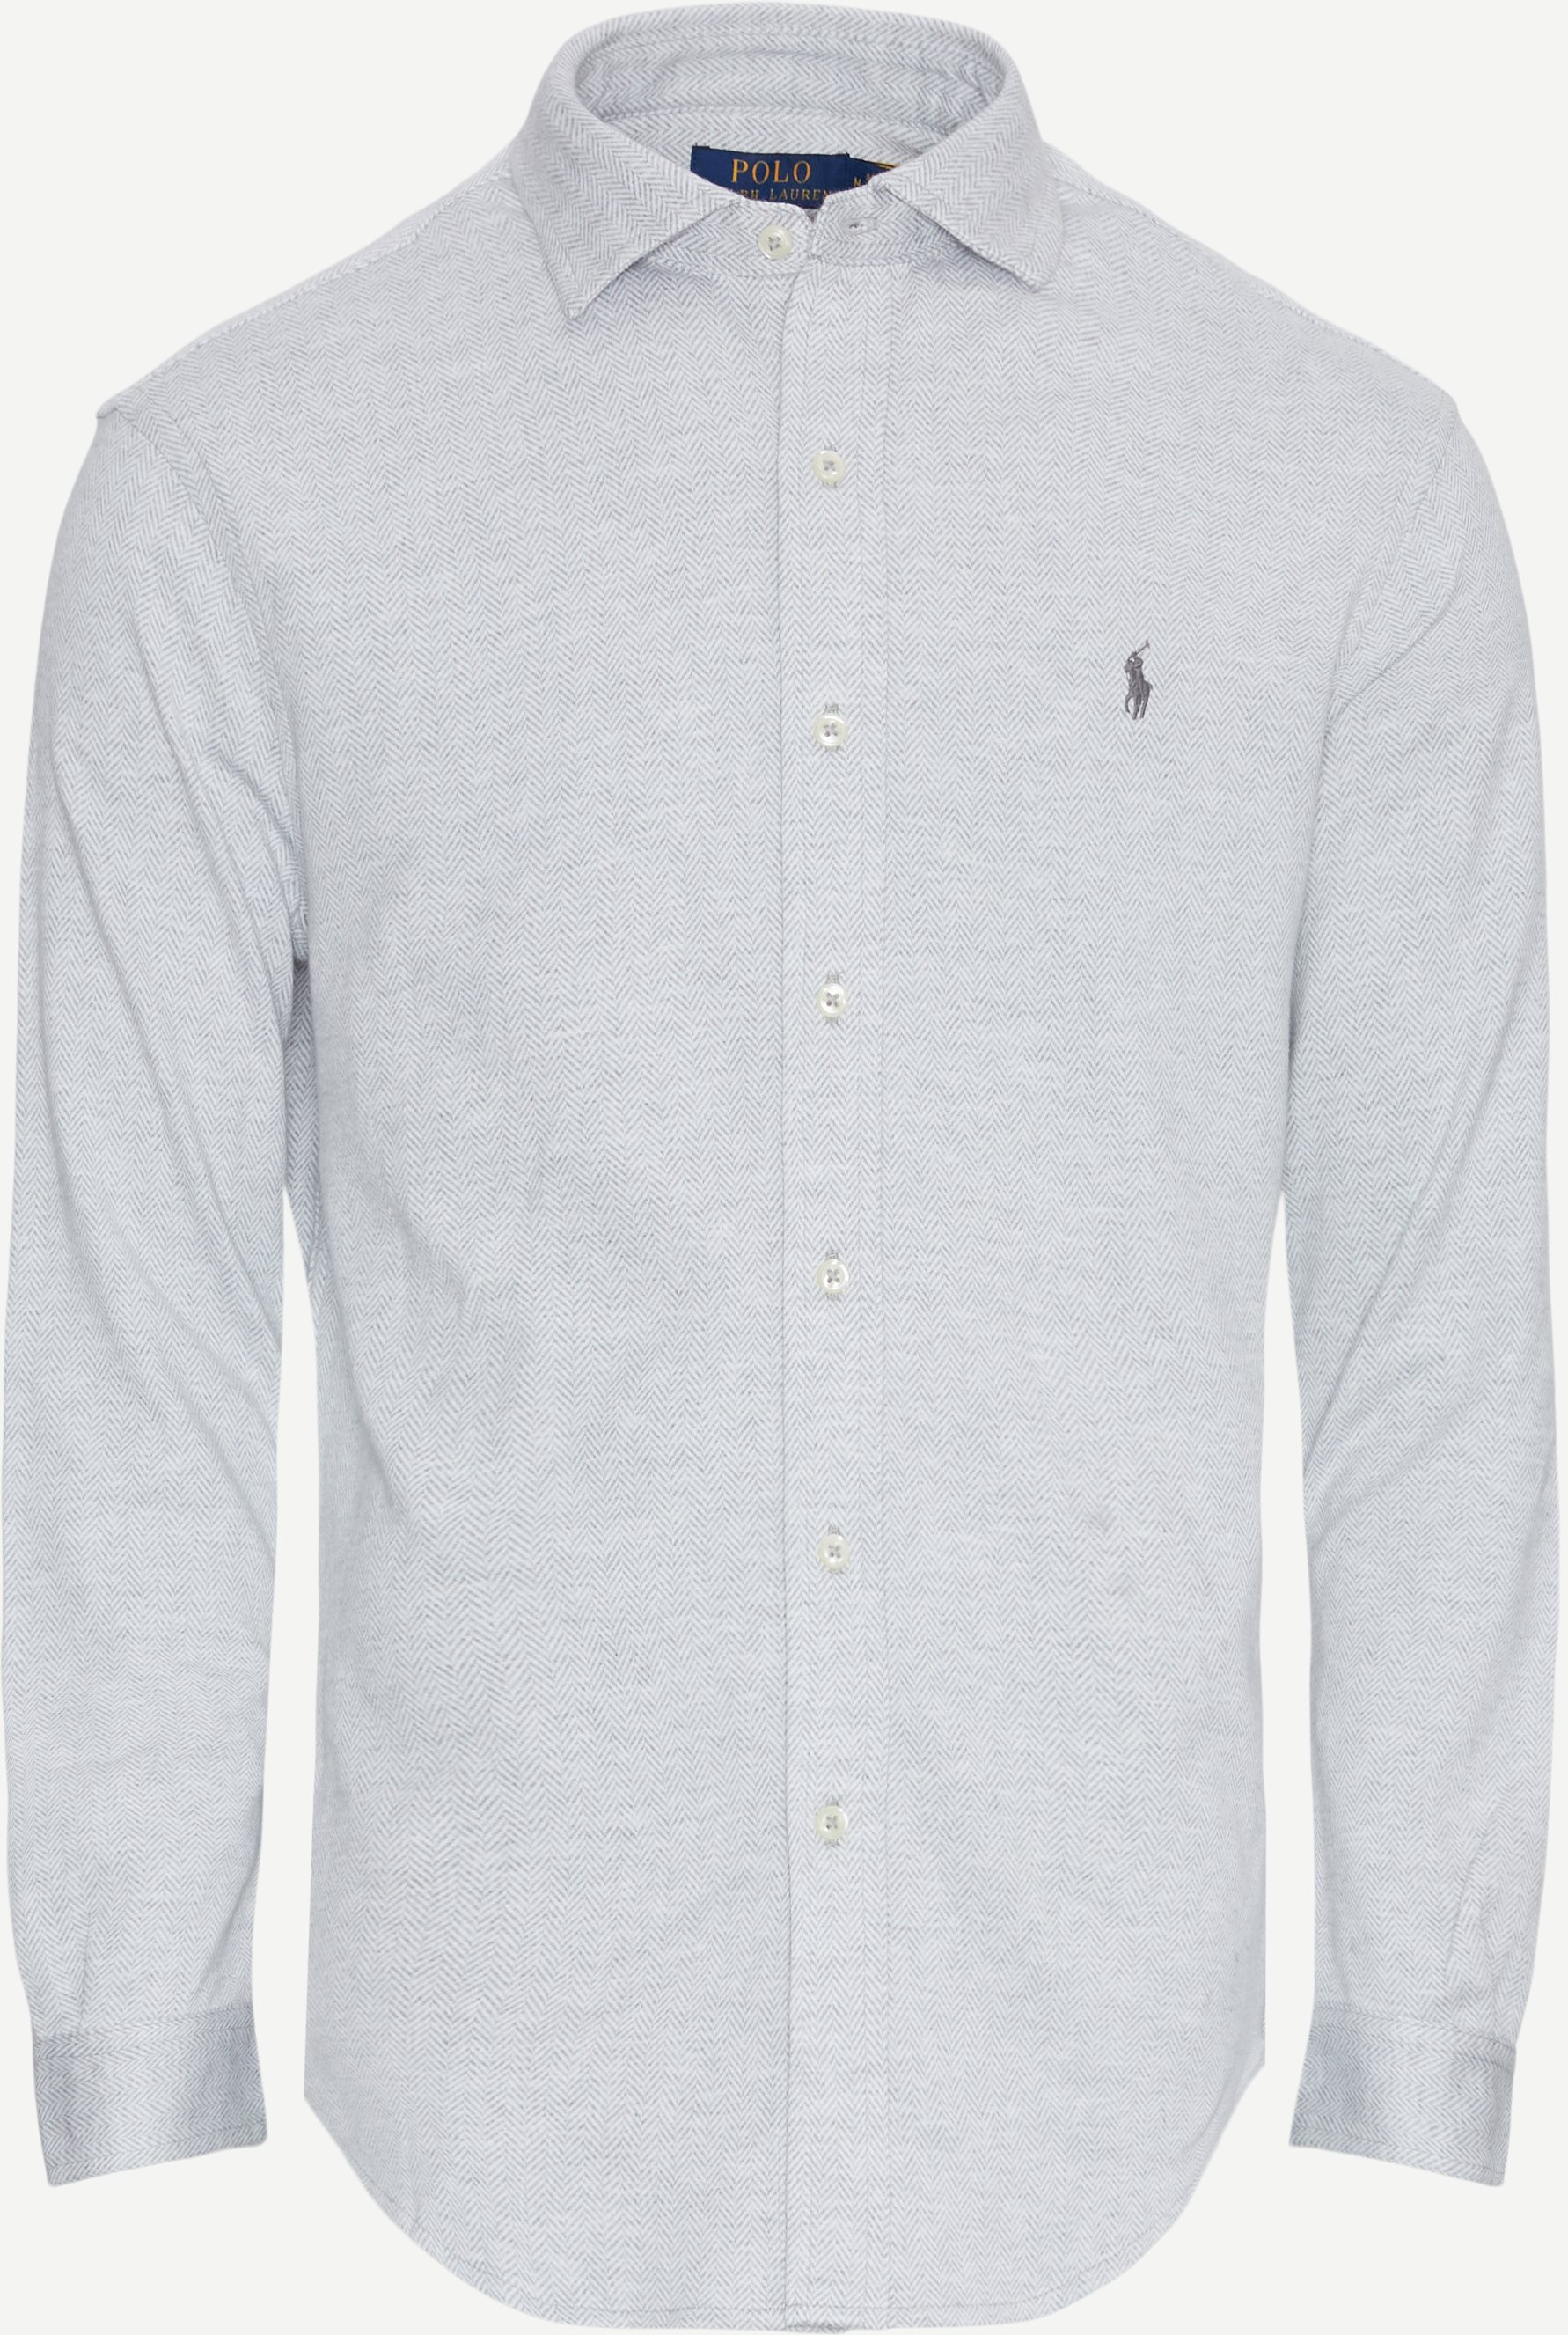 Polo Ralph Lauren Shirts 710909659 Grey